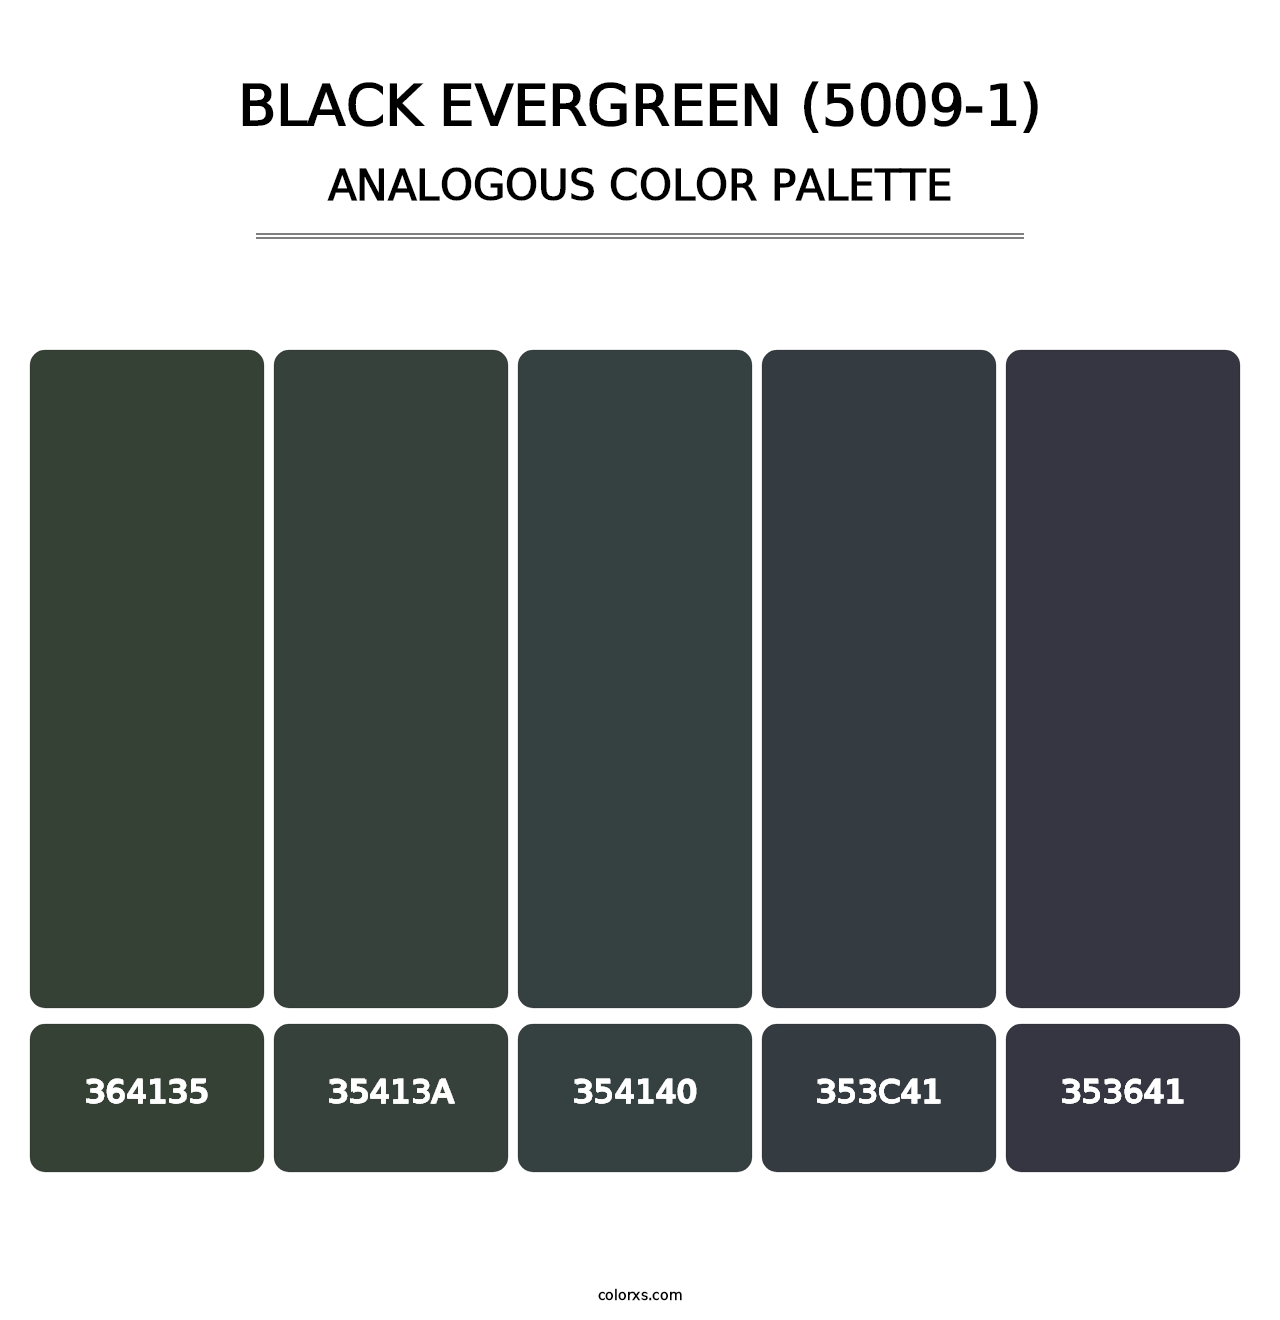 Black Evergreen (5009-1) - Analogous Color Palette